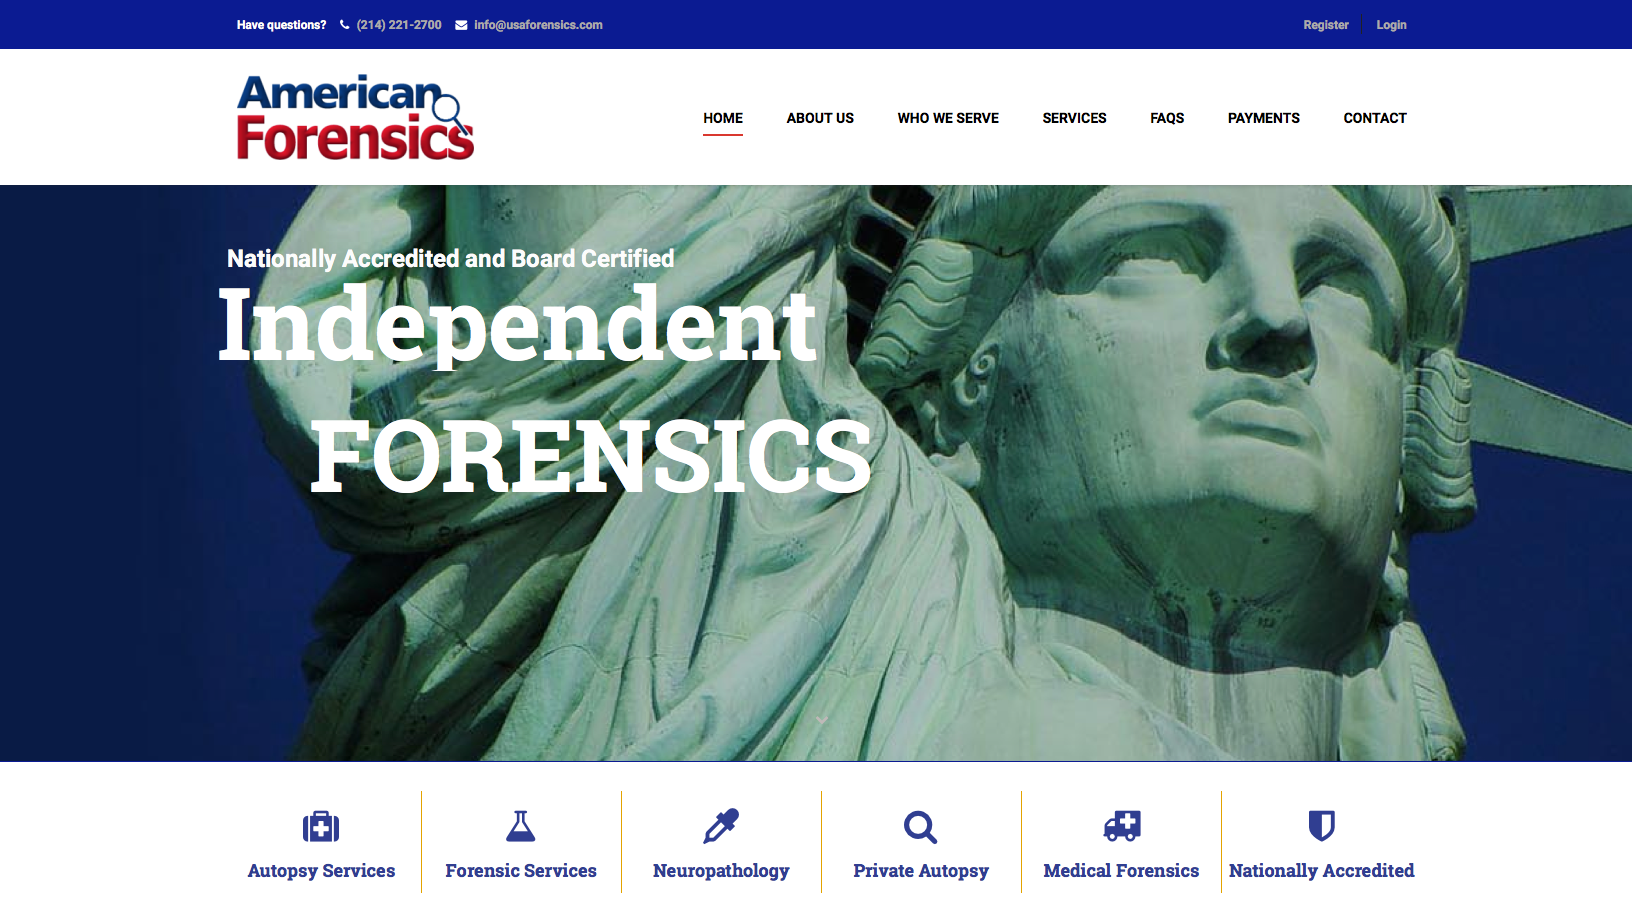 American Forensics